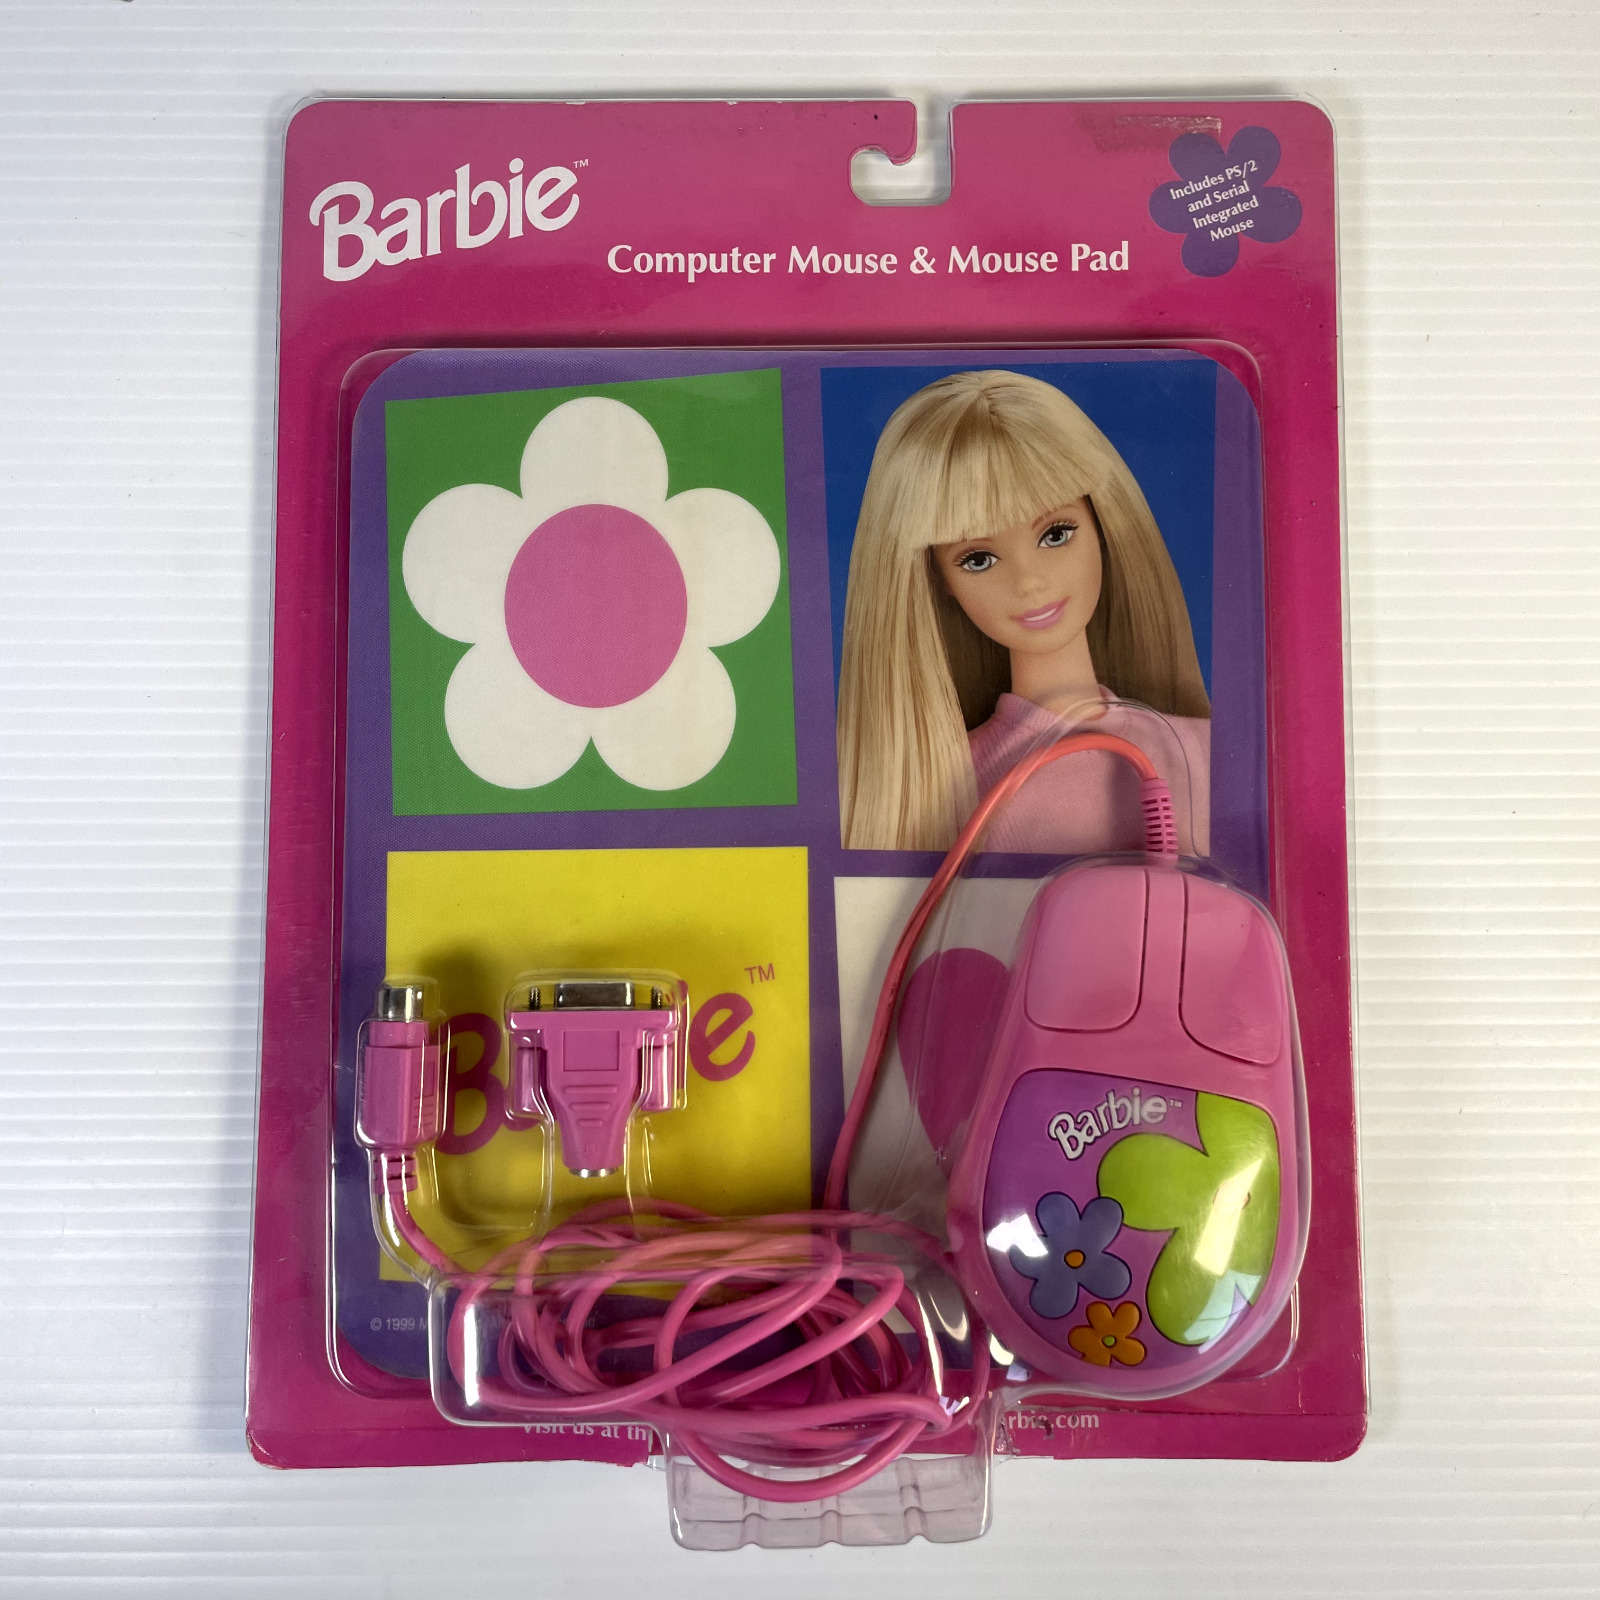 Vintage 1999 Barbie Computer Mouse & Mouse Pad Playworks